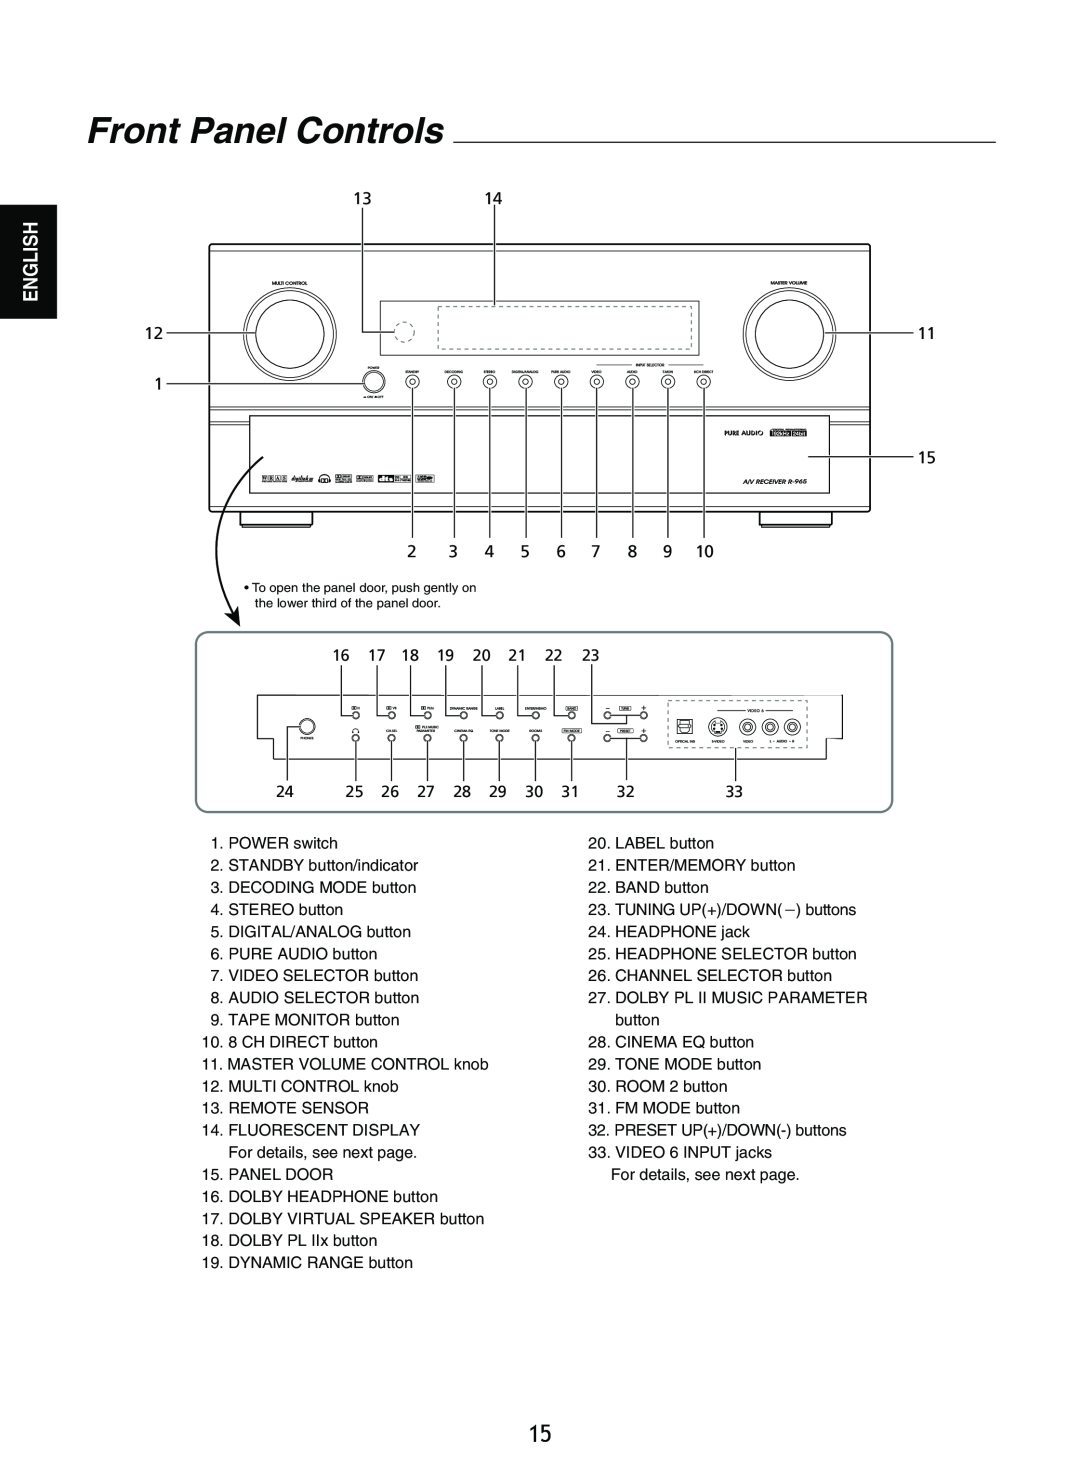 Sherwood R-965 manual Front Panel Controls, English 